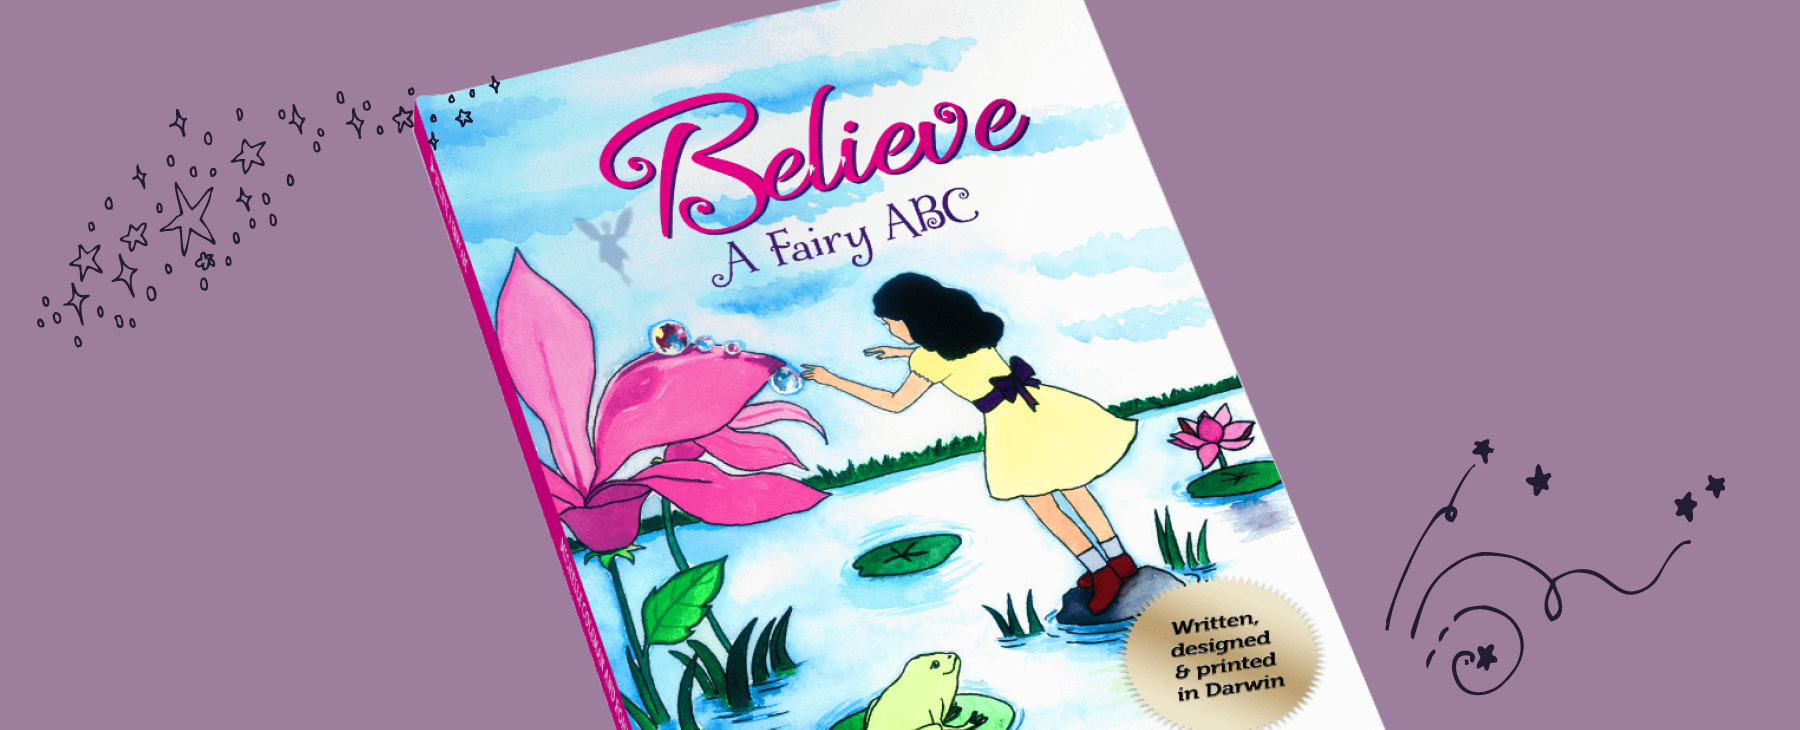 Believe — A Fairy ABC book cover